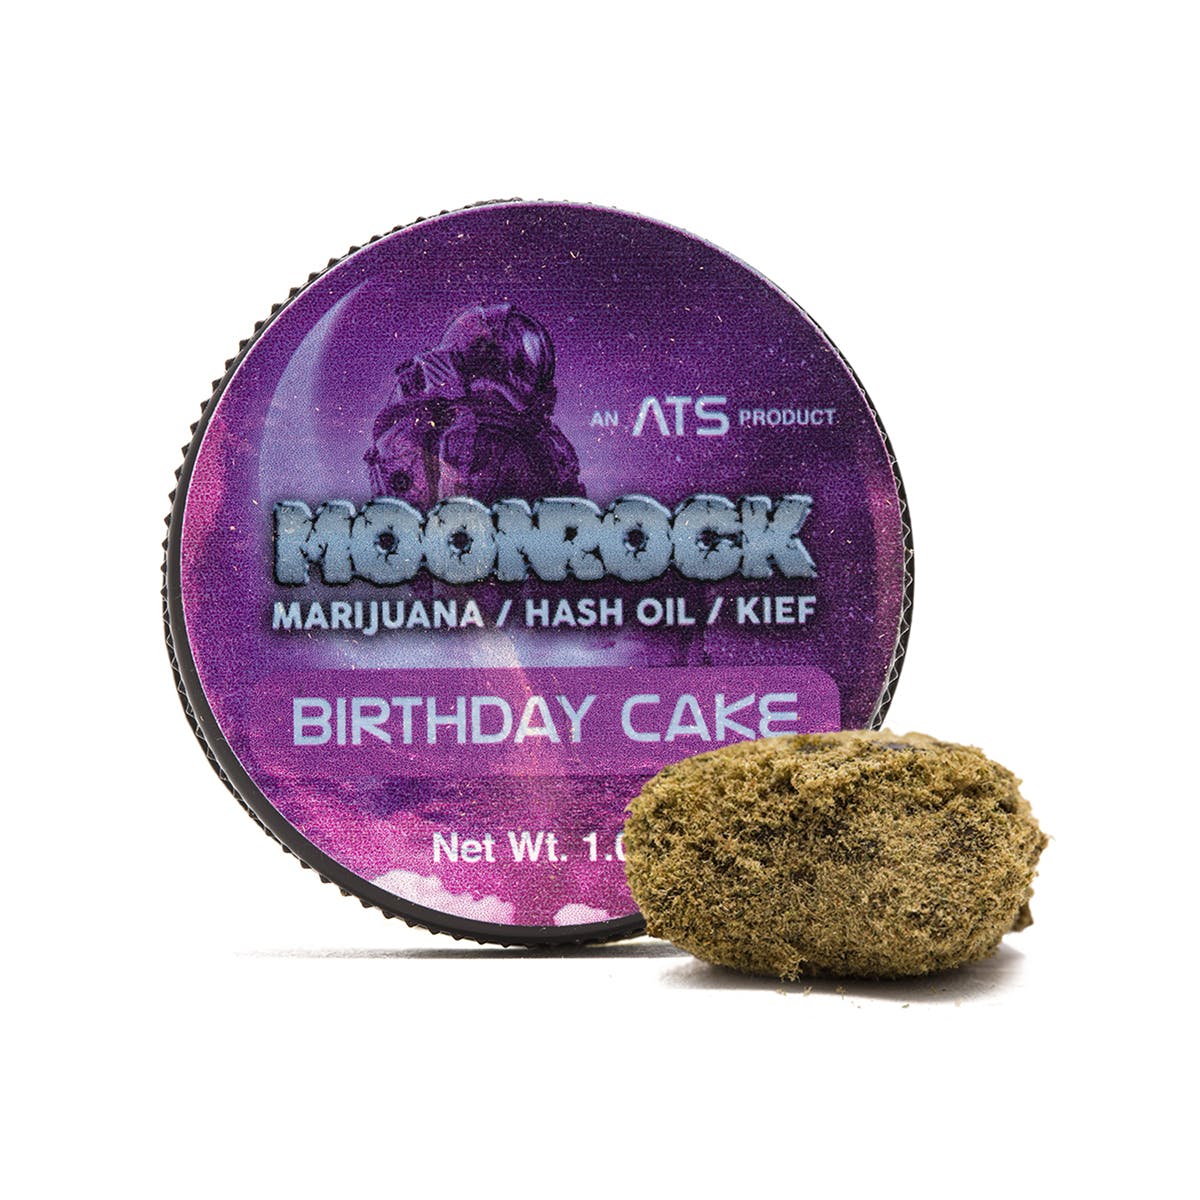 marijuana-dispensaries-green-circle-chula-vista-24hrs-in-chula-vista-birthday-cake-moonrocks